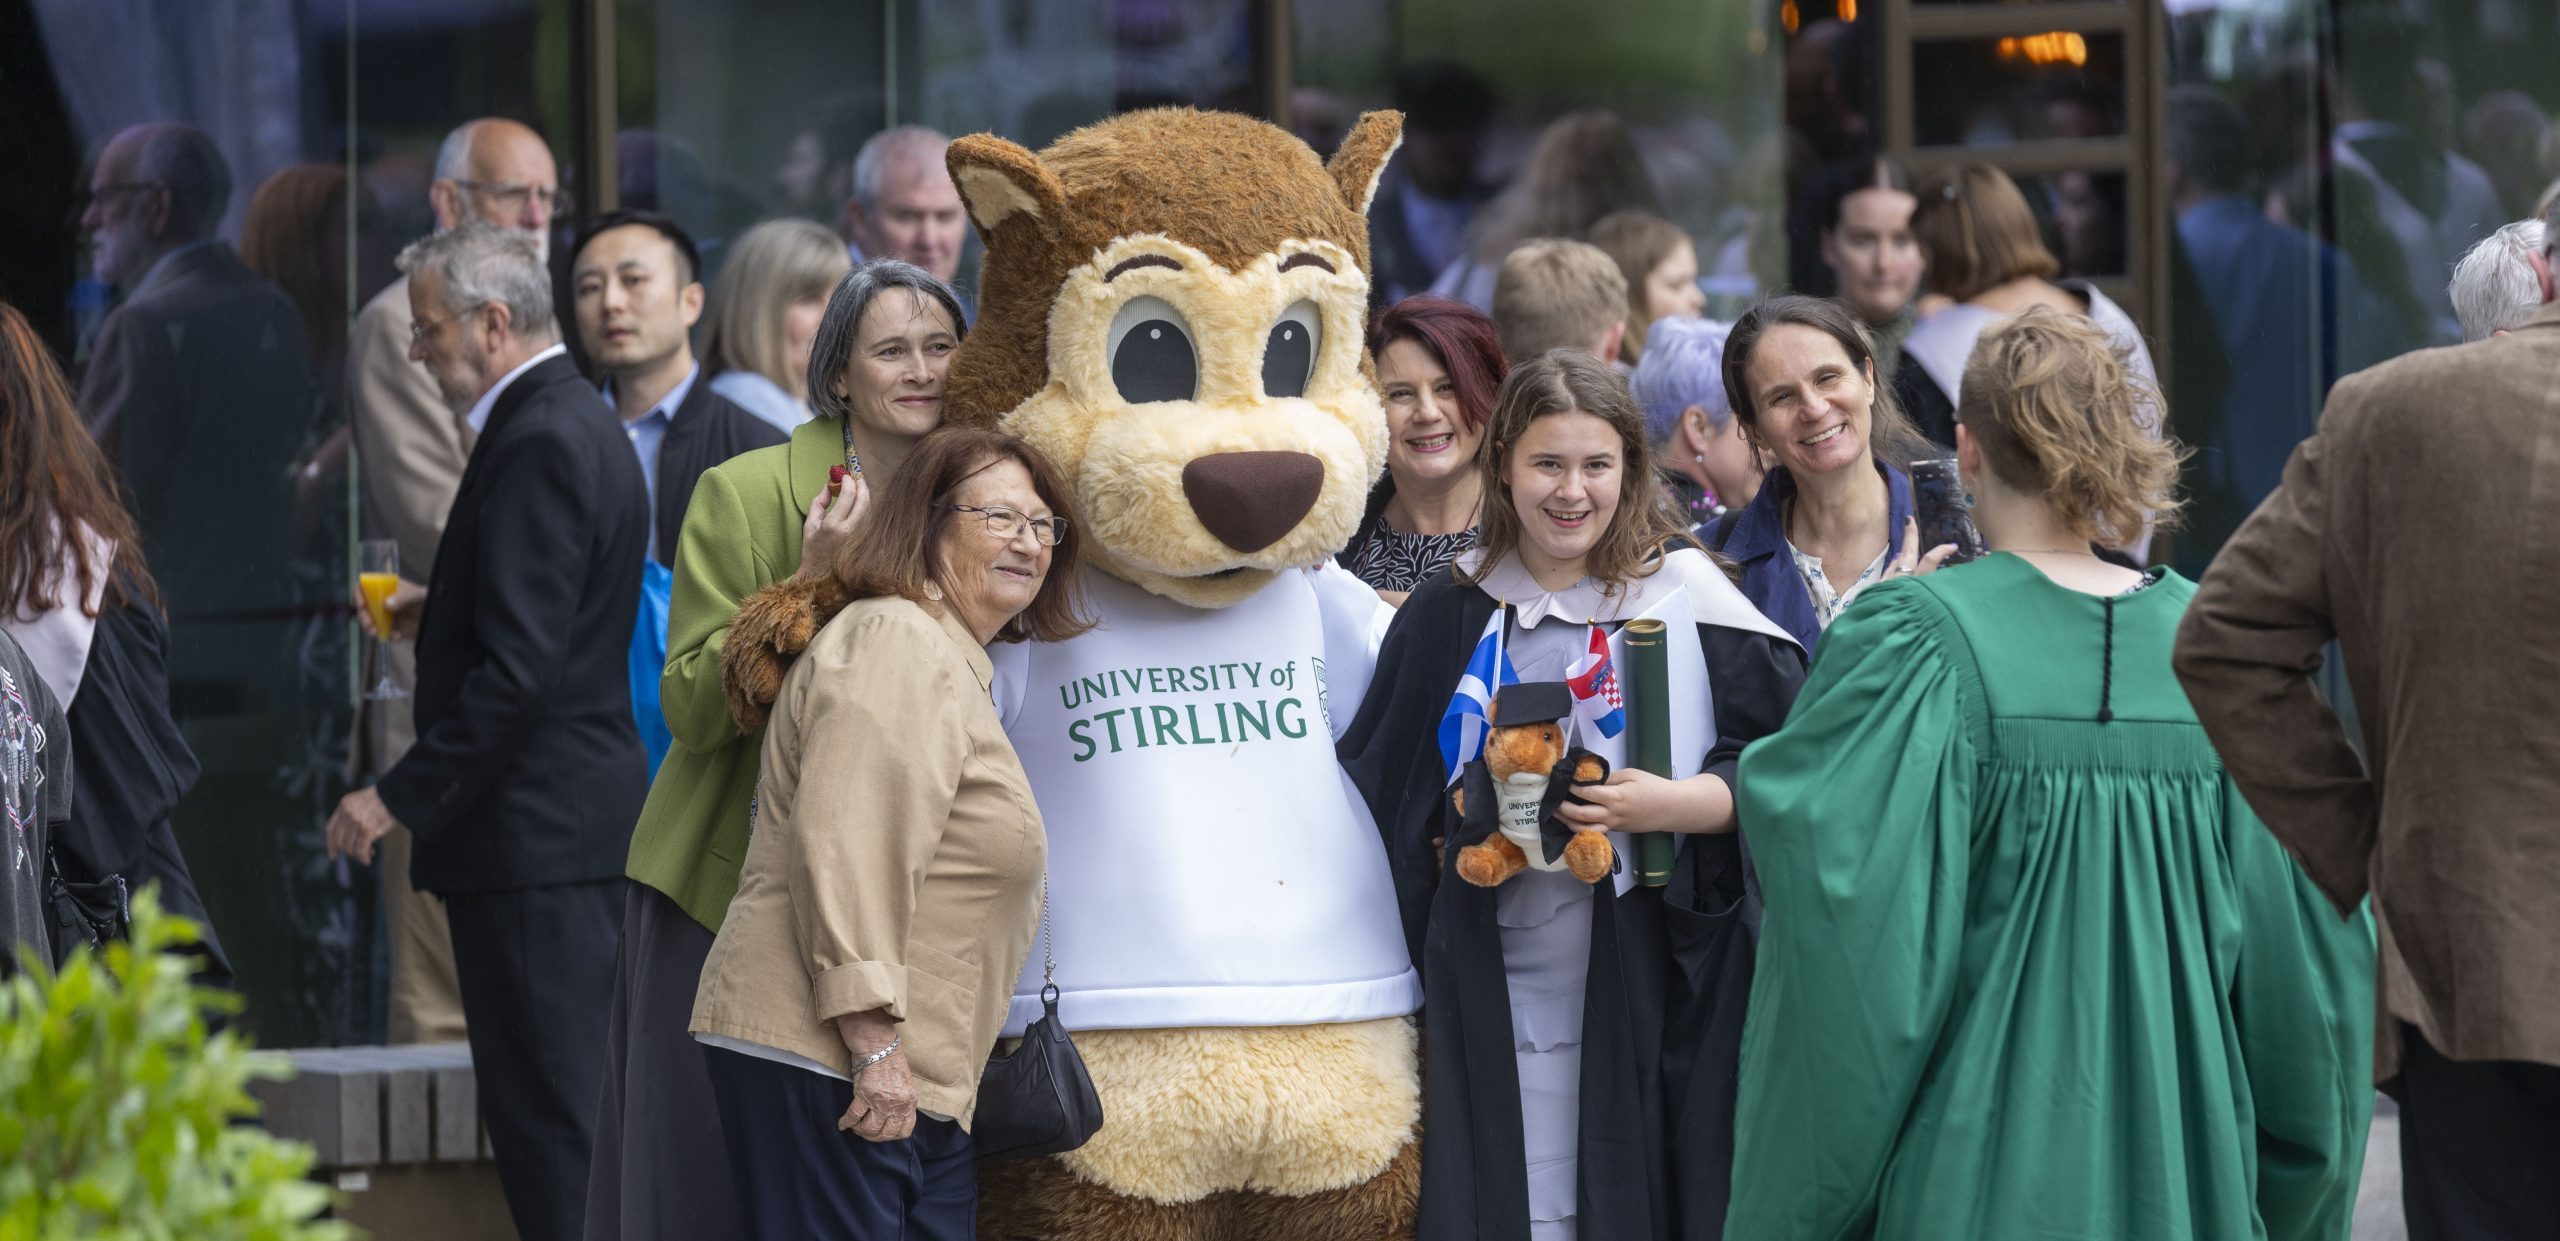 University of Stirling graduation reception